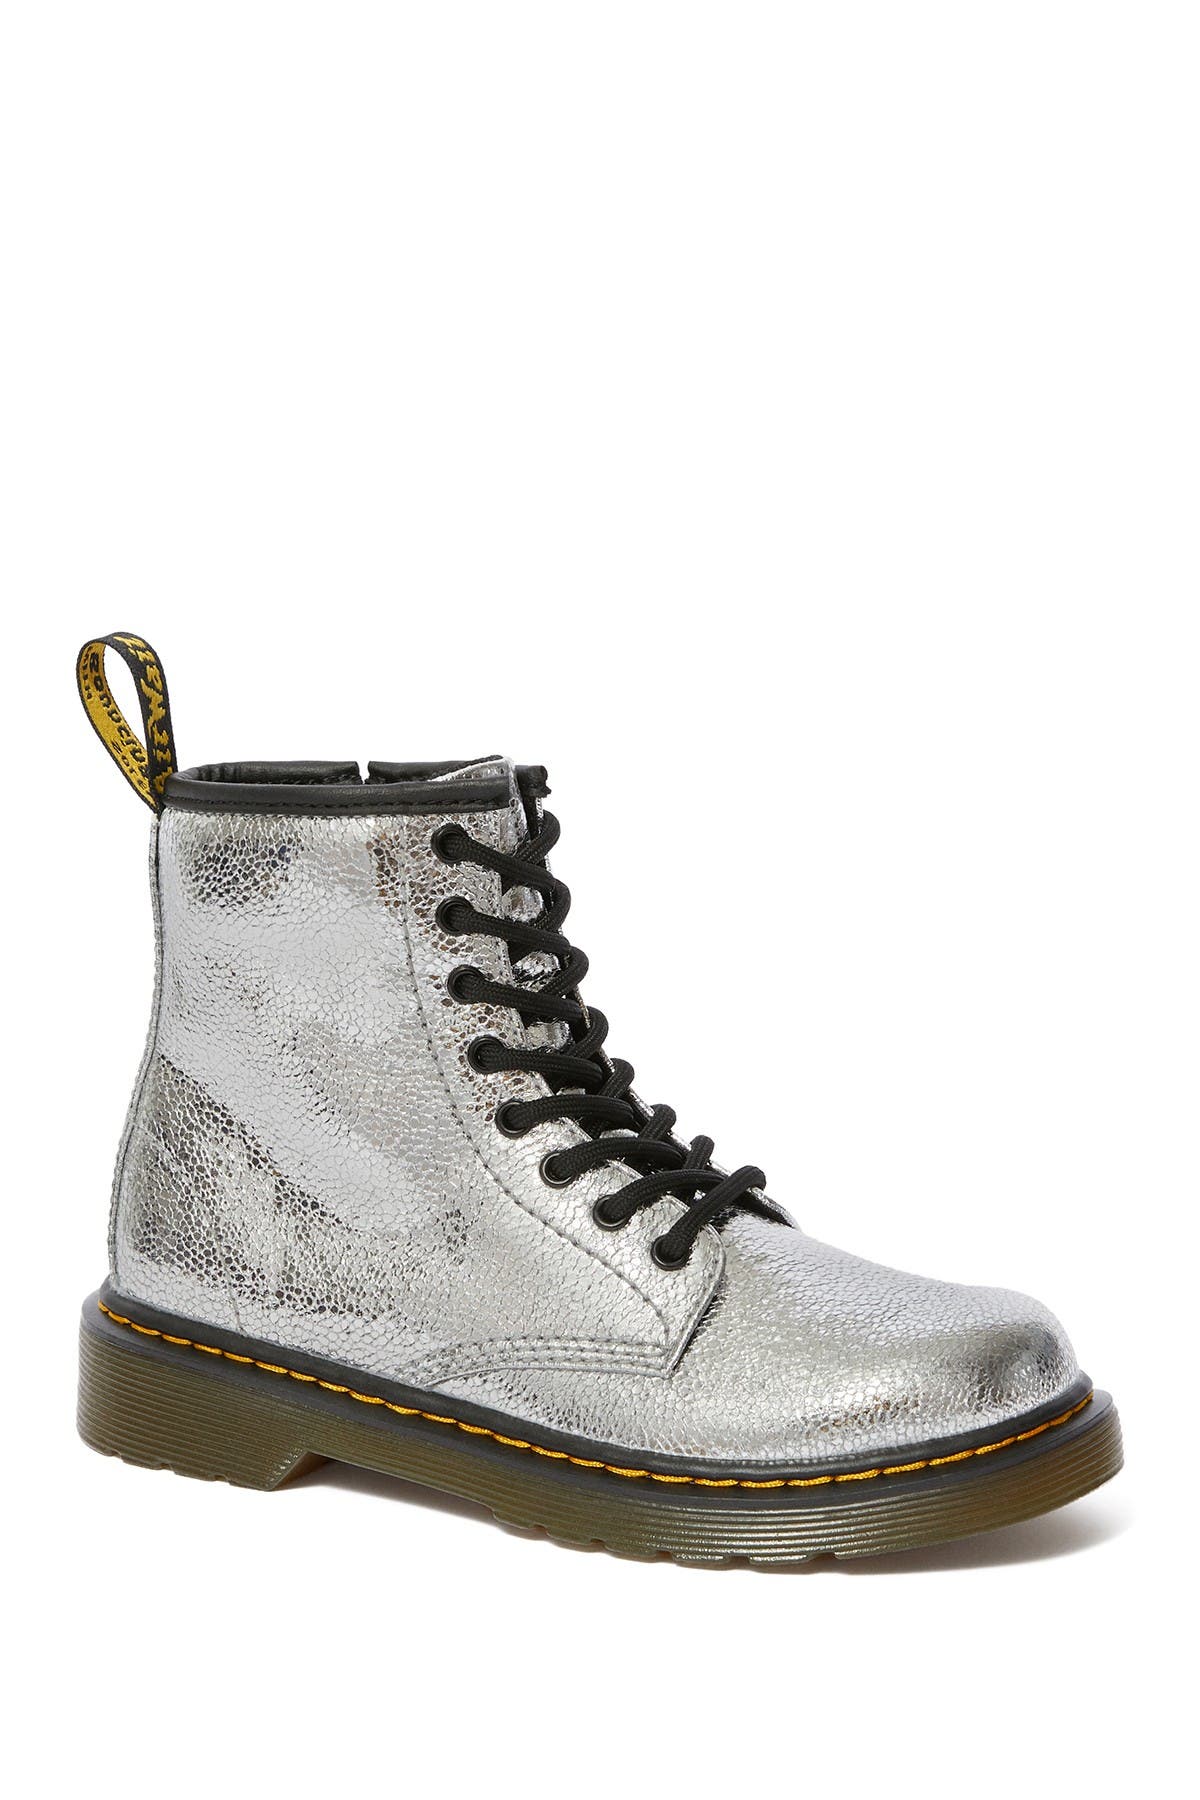 metallic boot